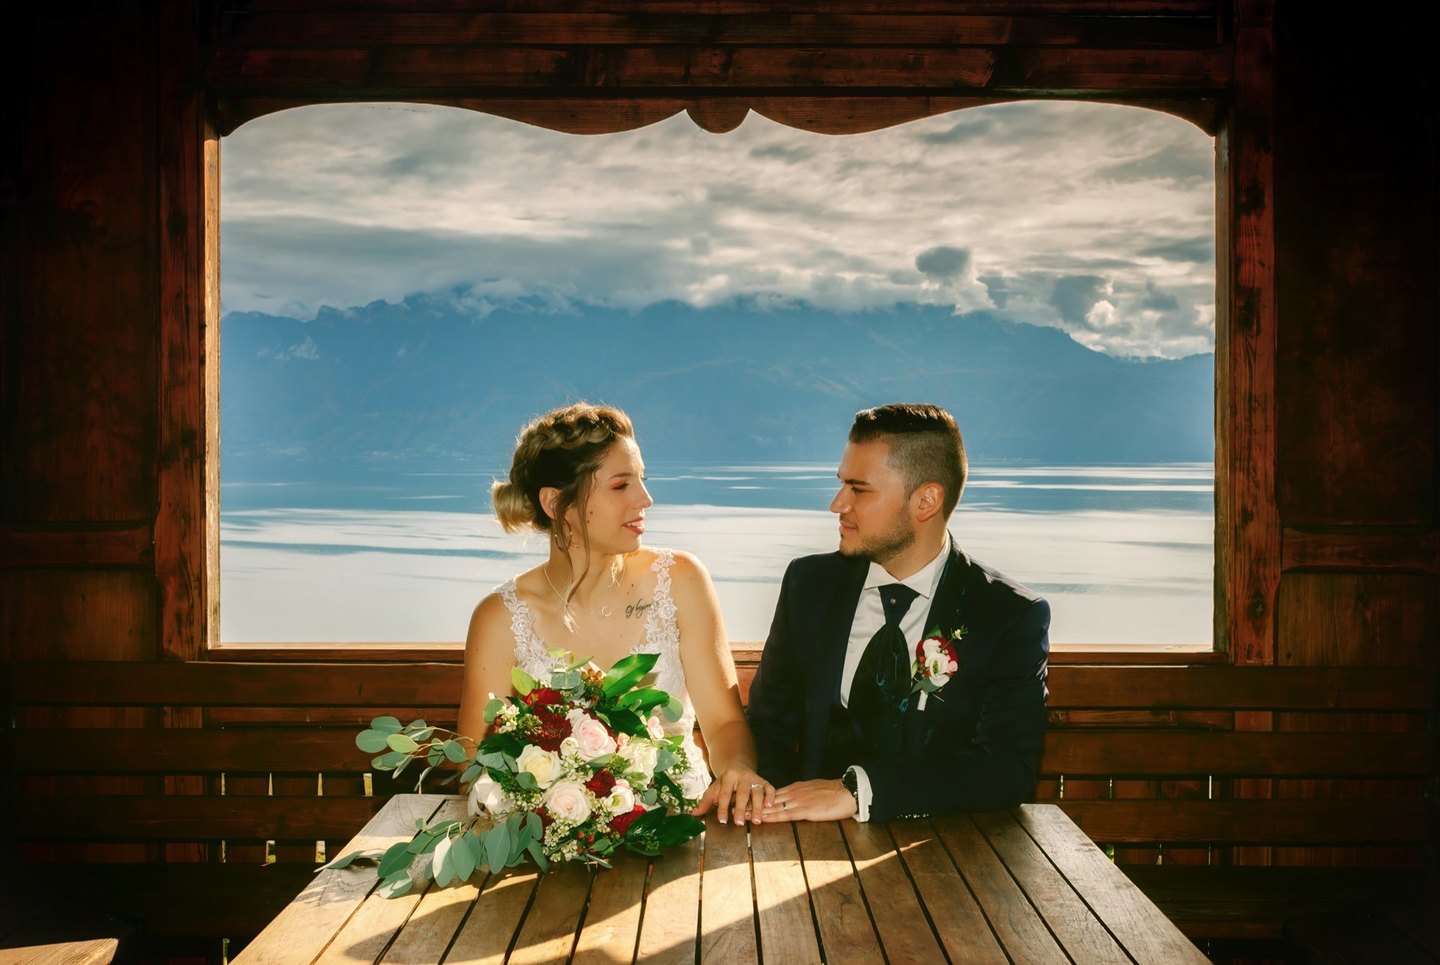 Casar na Suiça - Mariage en Suisse  